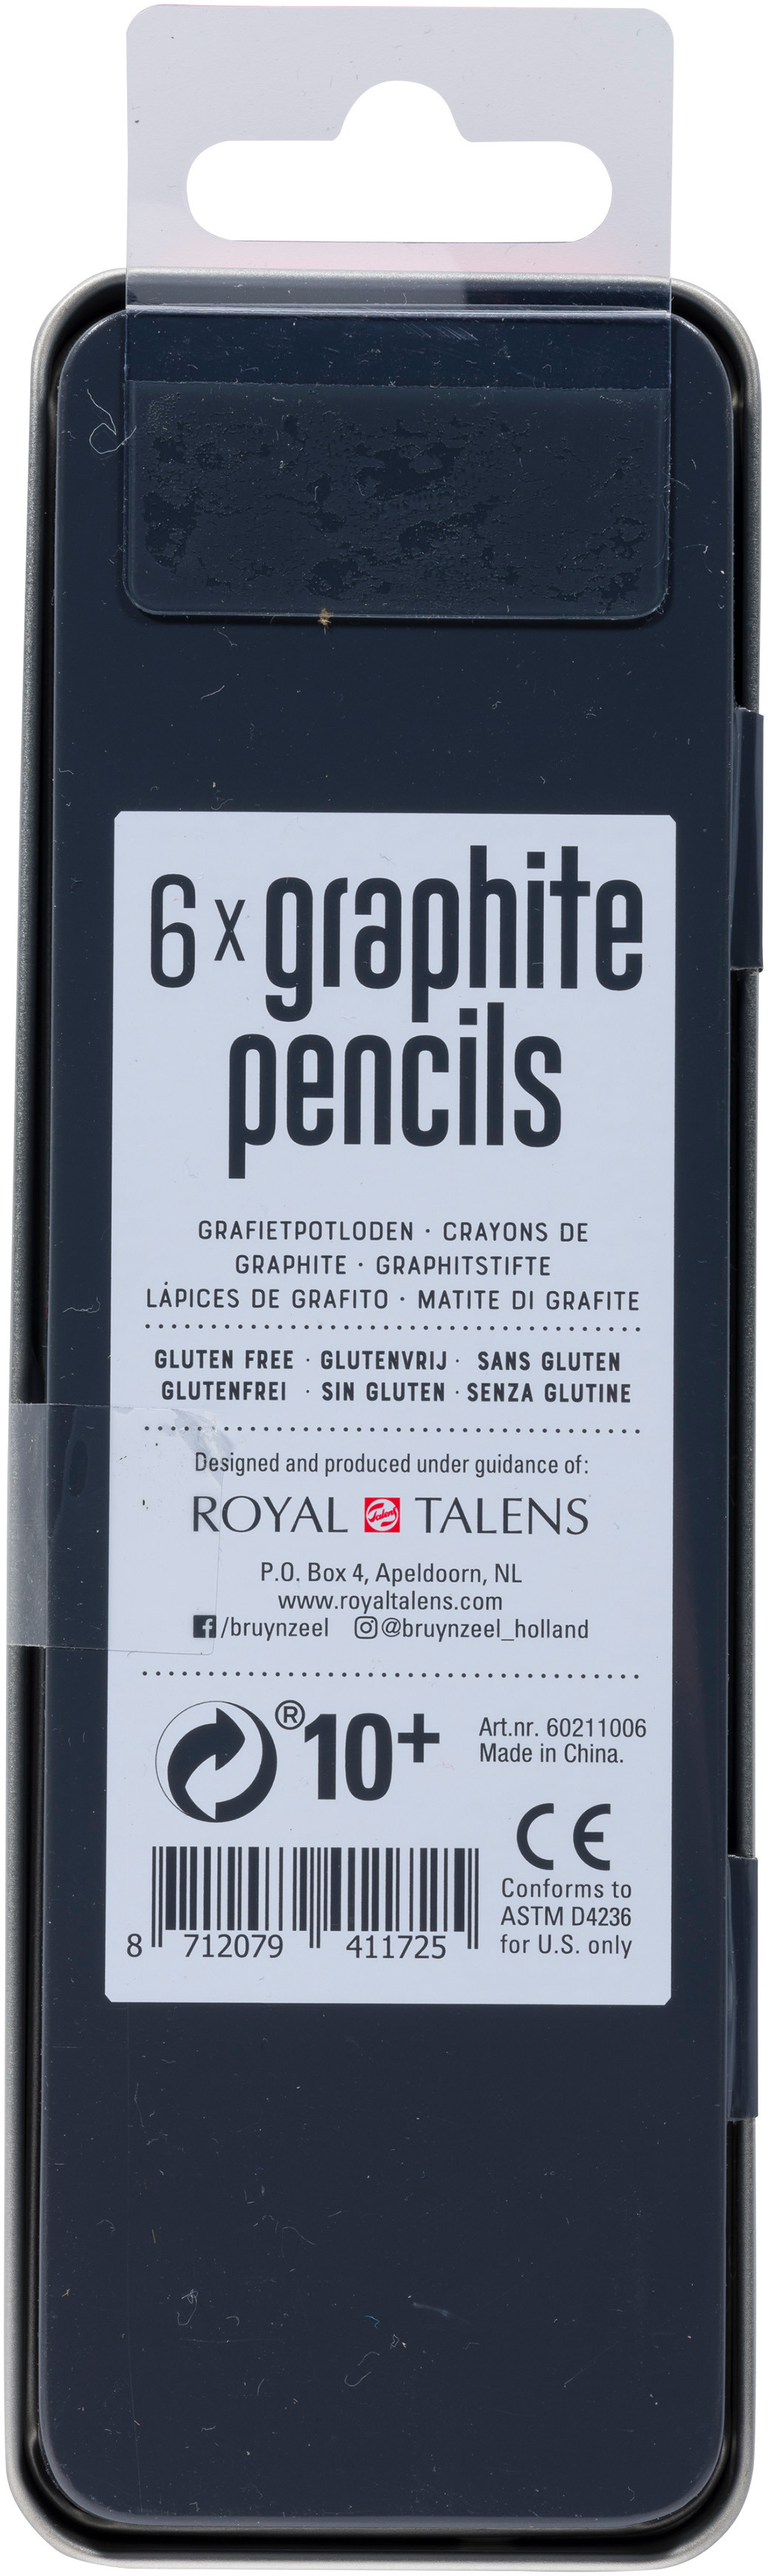 BRUYNZEEL Crayon de graphite Burotek 60211006 Etui en métal 6 pcs.